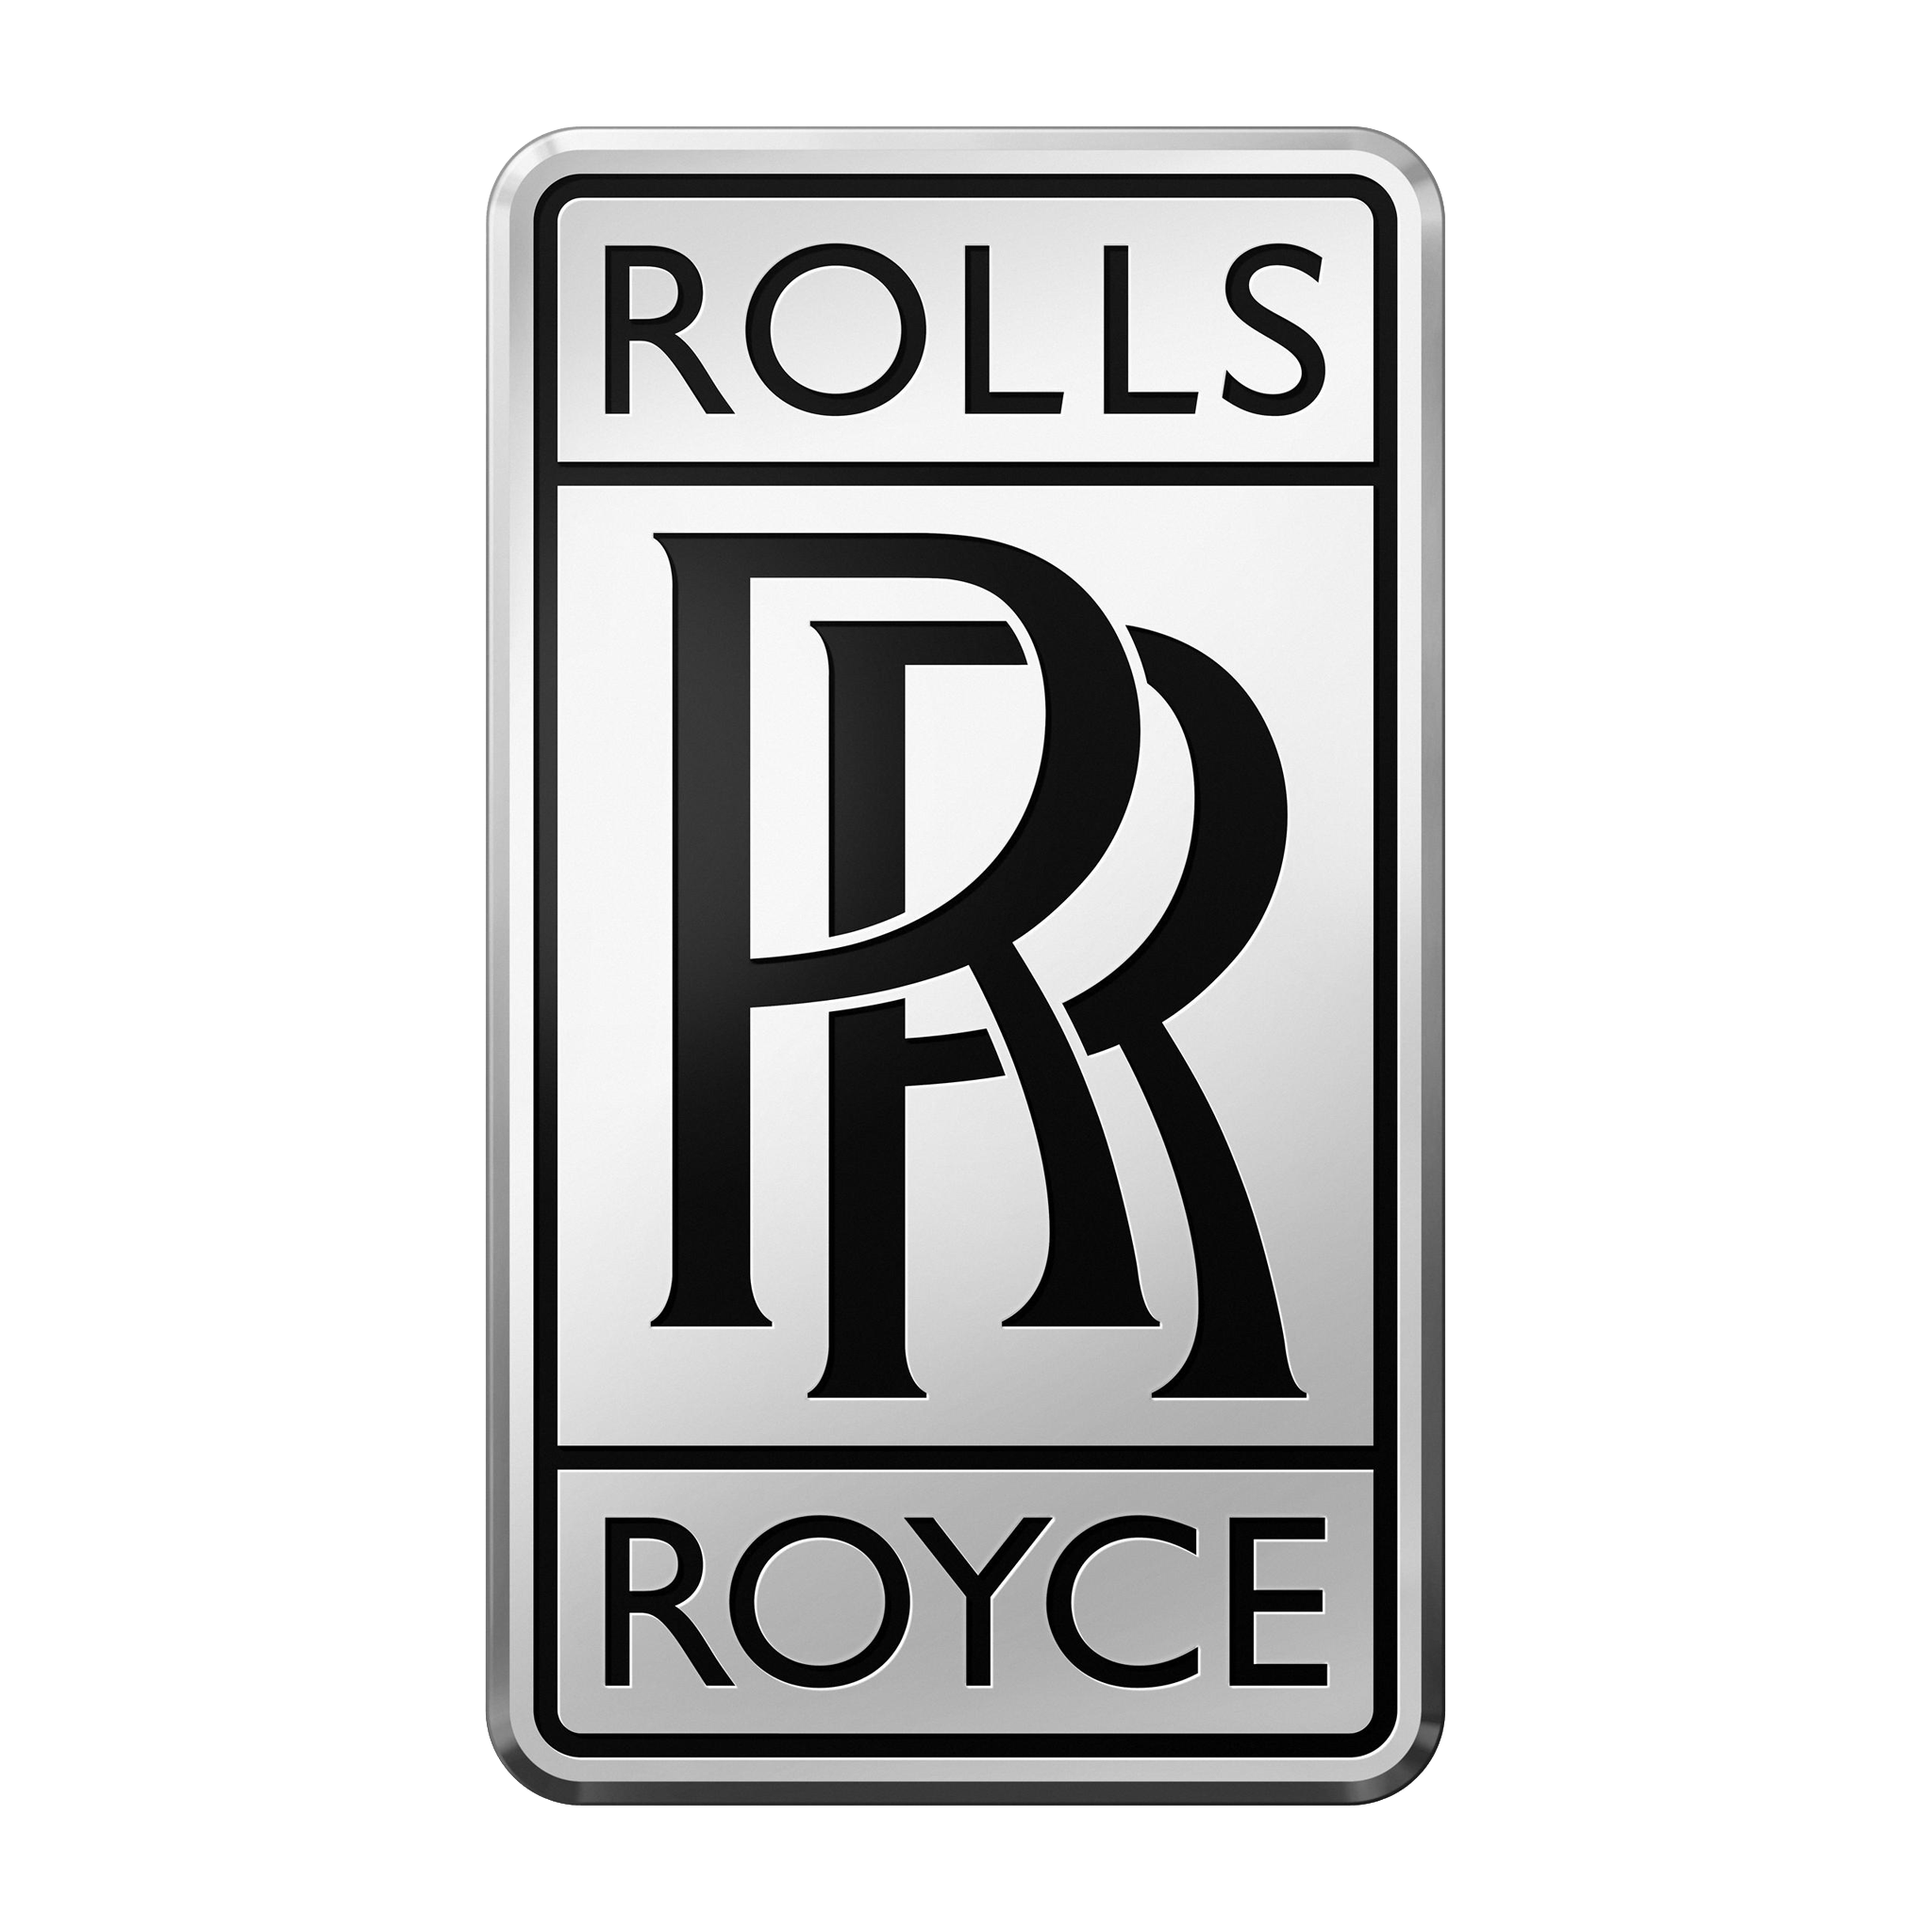 Rolls royce logo photo